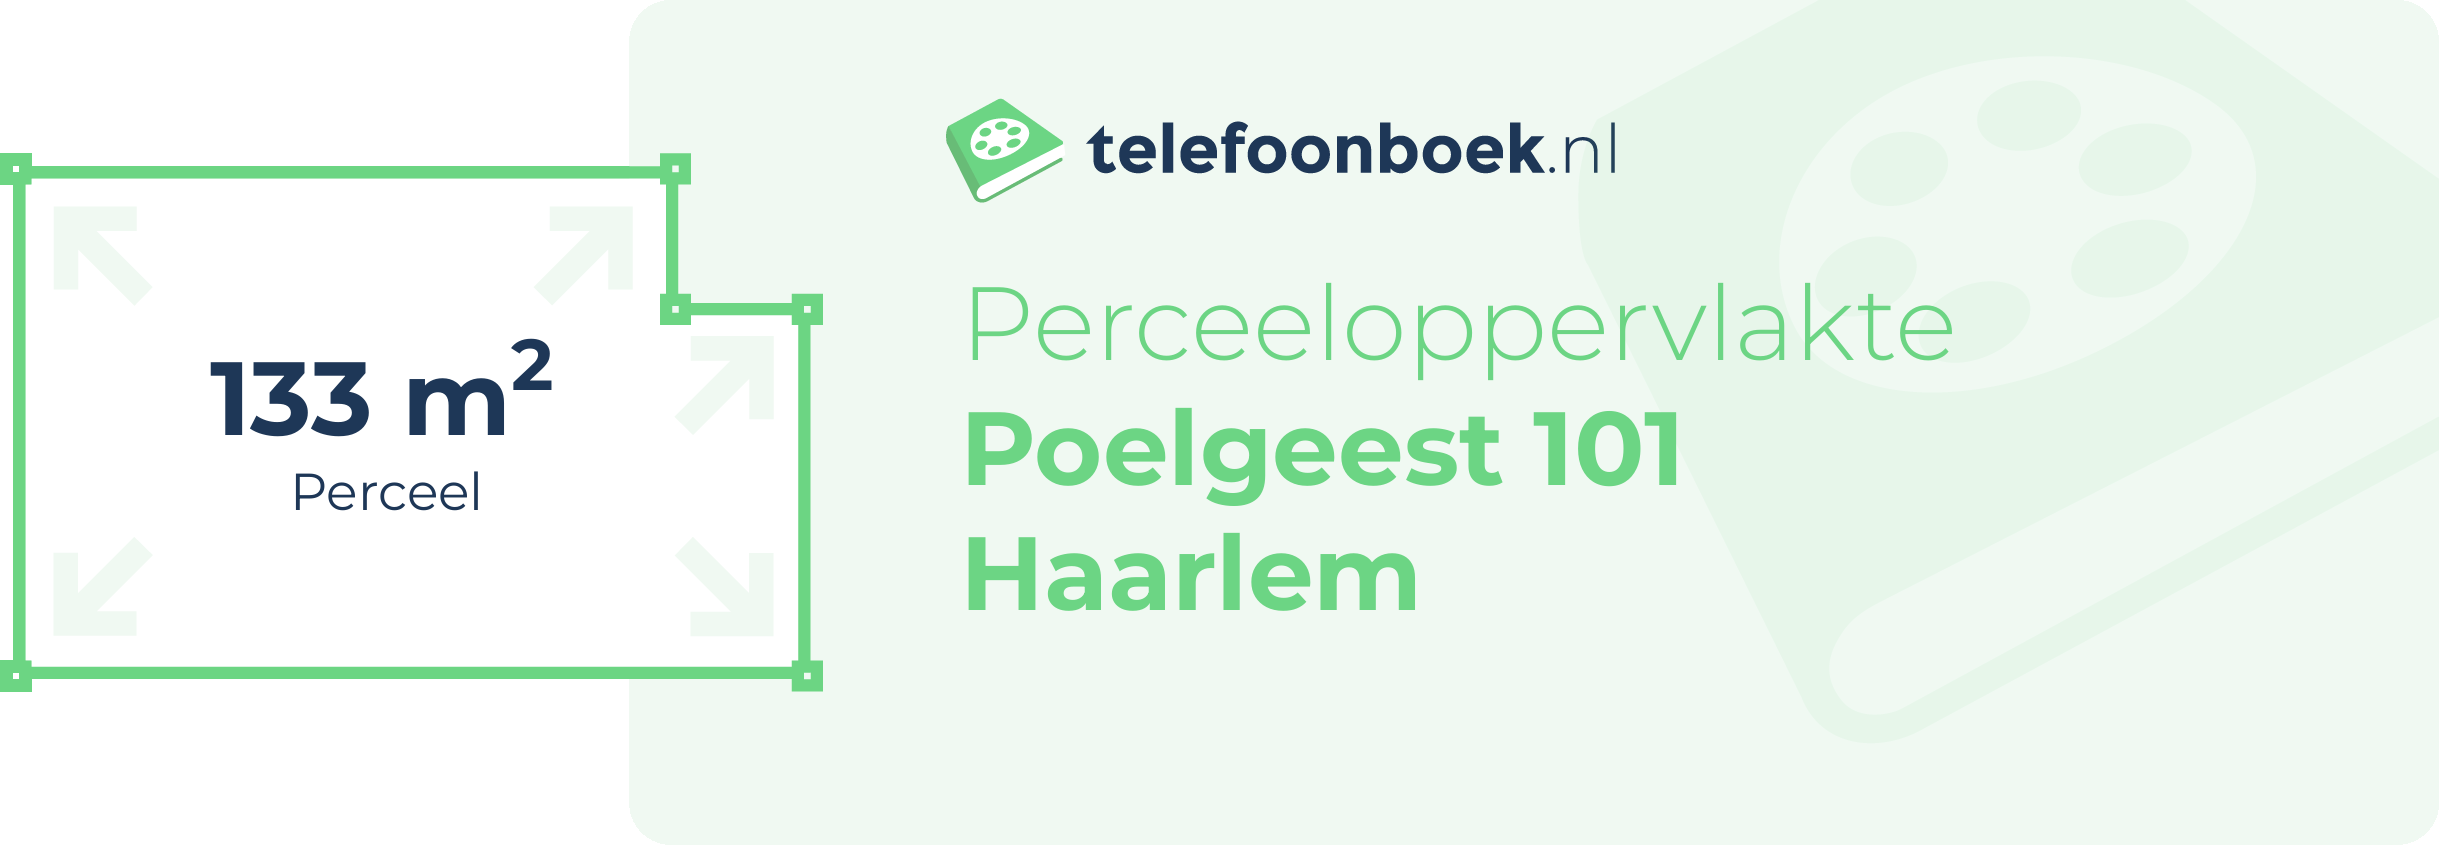 Perceeloppervlakte Poelgeest 101 Haarlem